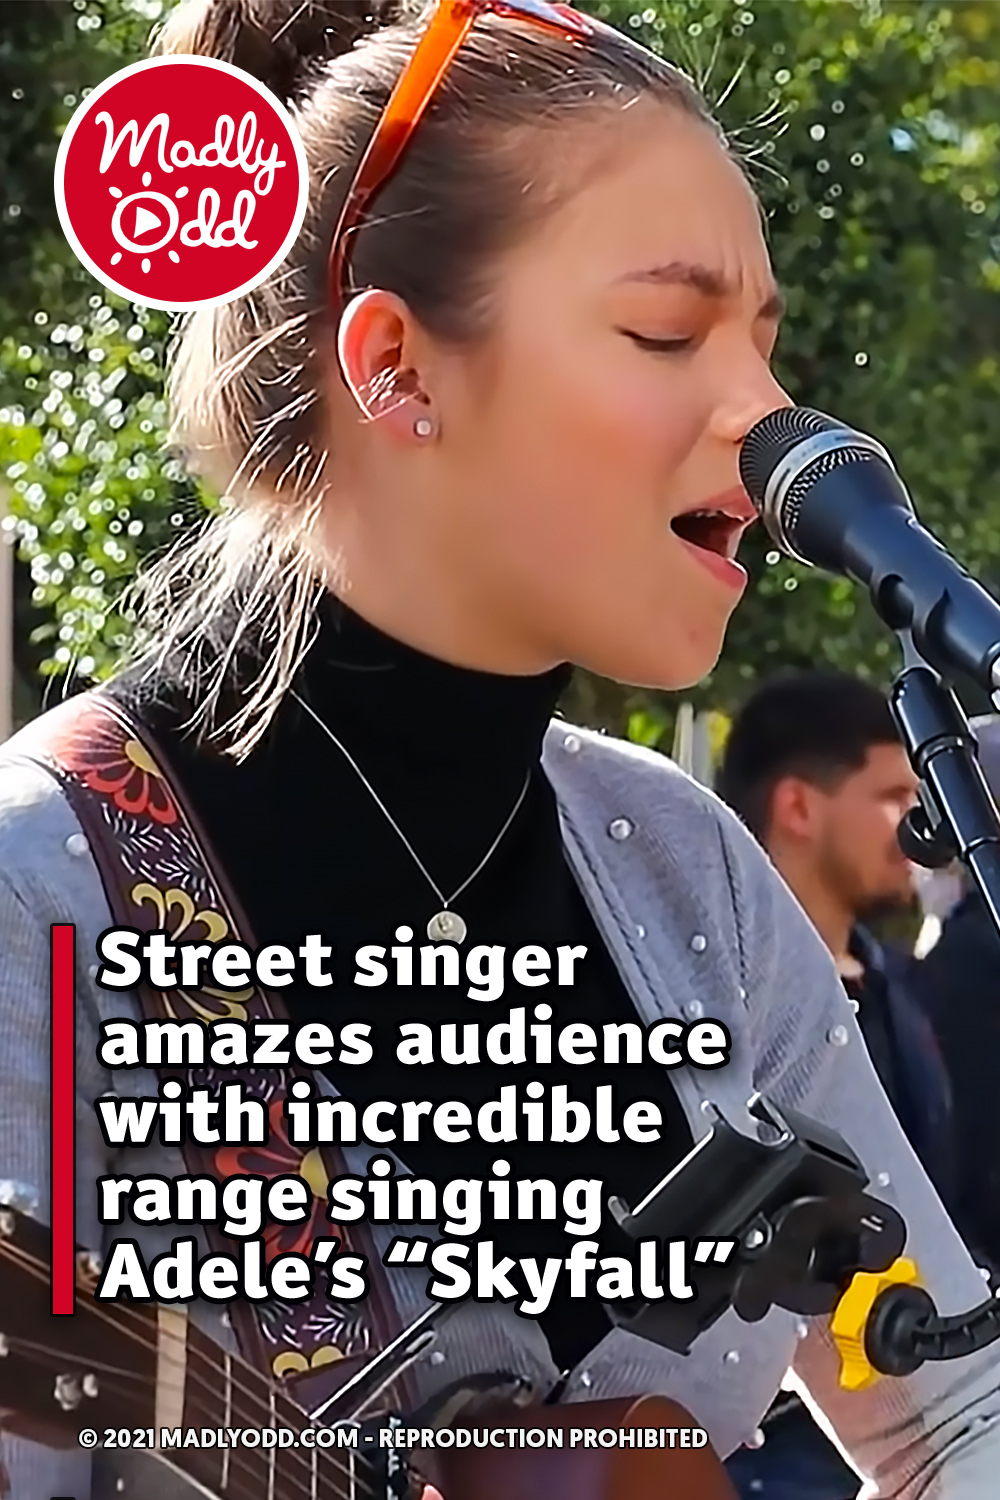 Street singer amazes audience with incredible range singing Adele’s “Skyfall”